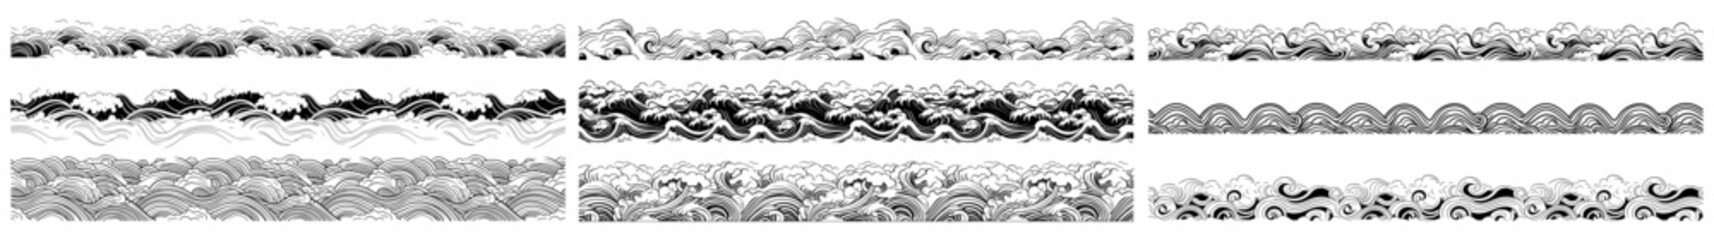 asian wave border. cloud pattern tile.